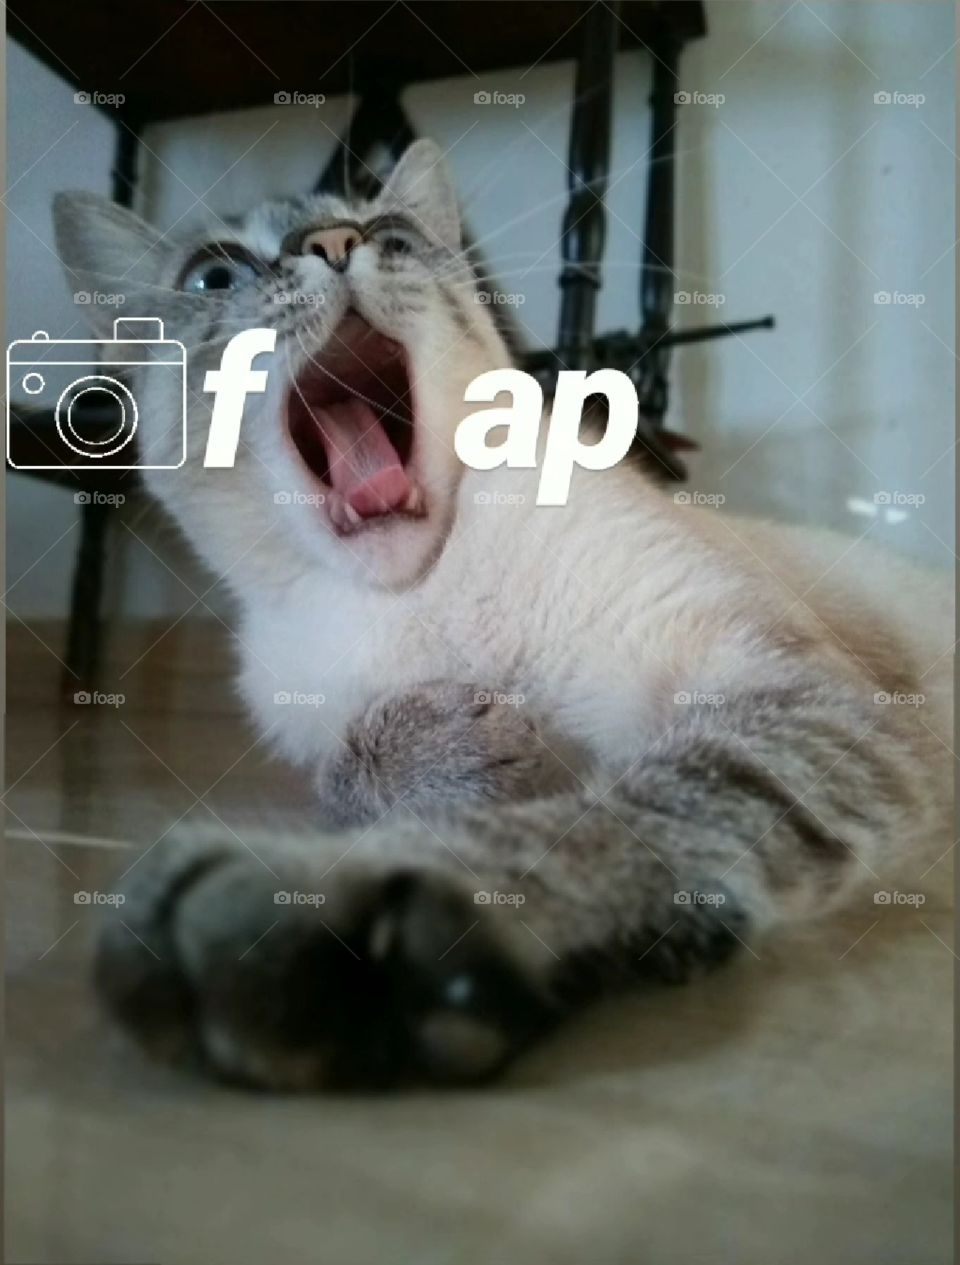 f(cat)ap